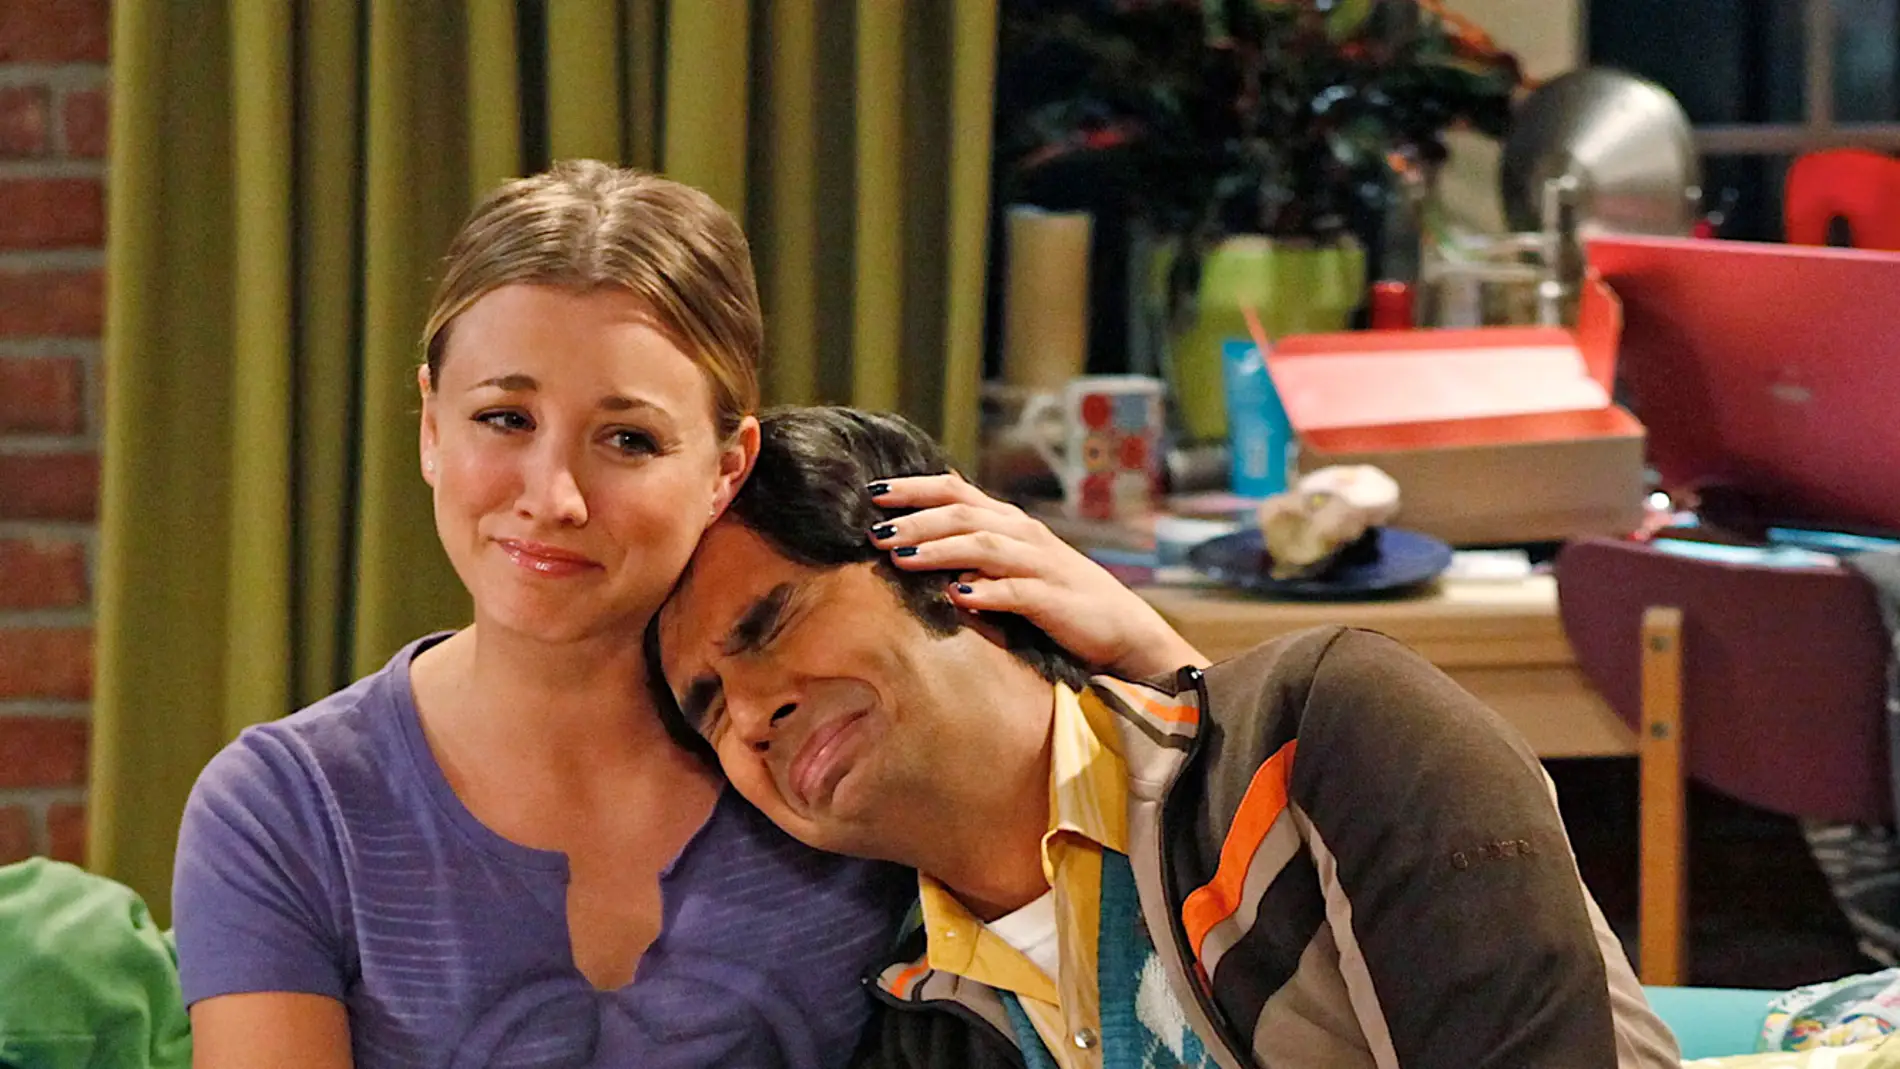 Penny y Raj en 'The Big Bang Theory'